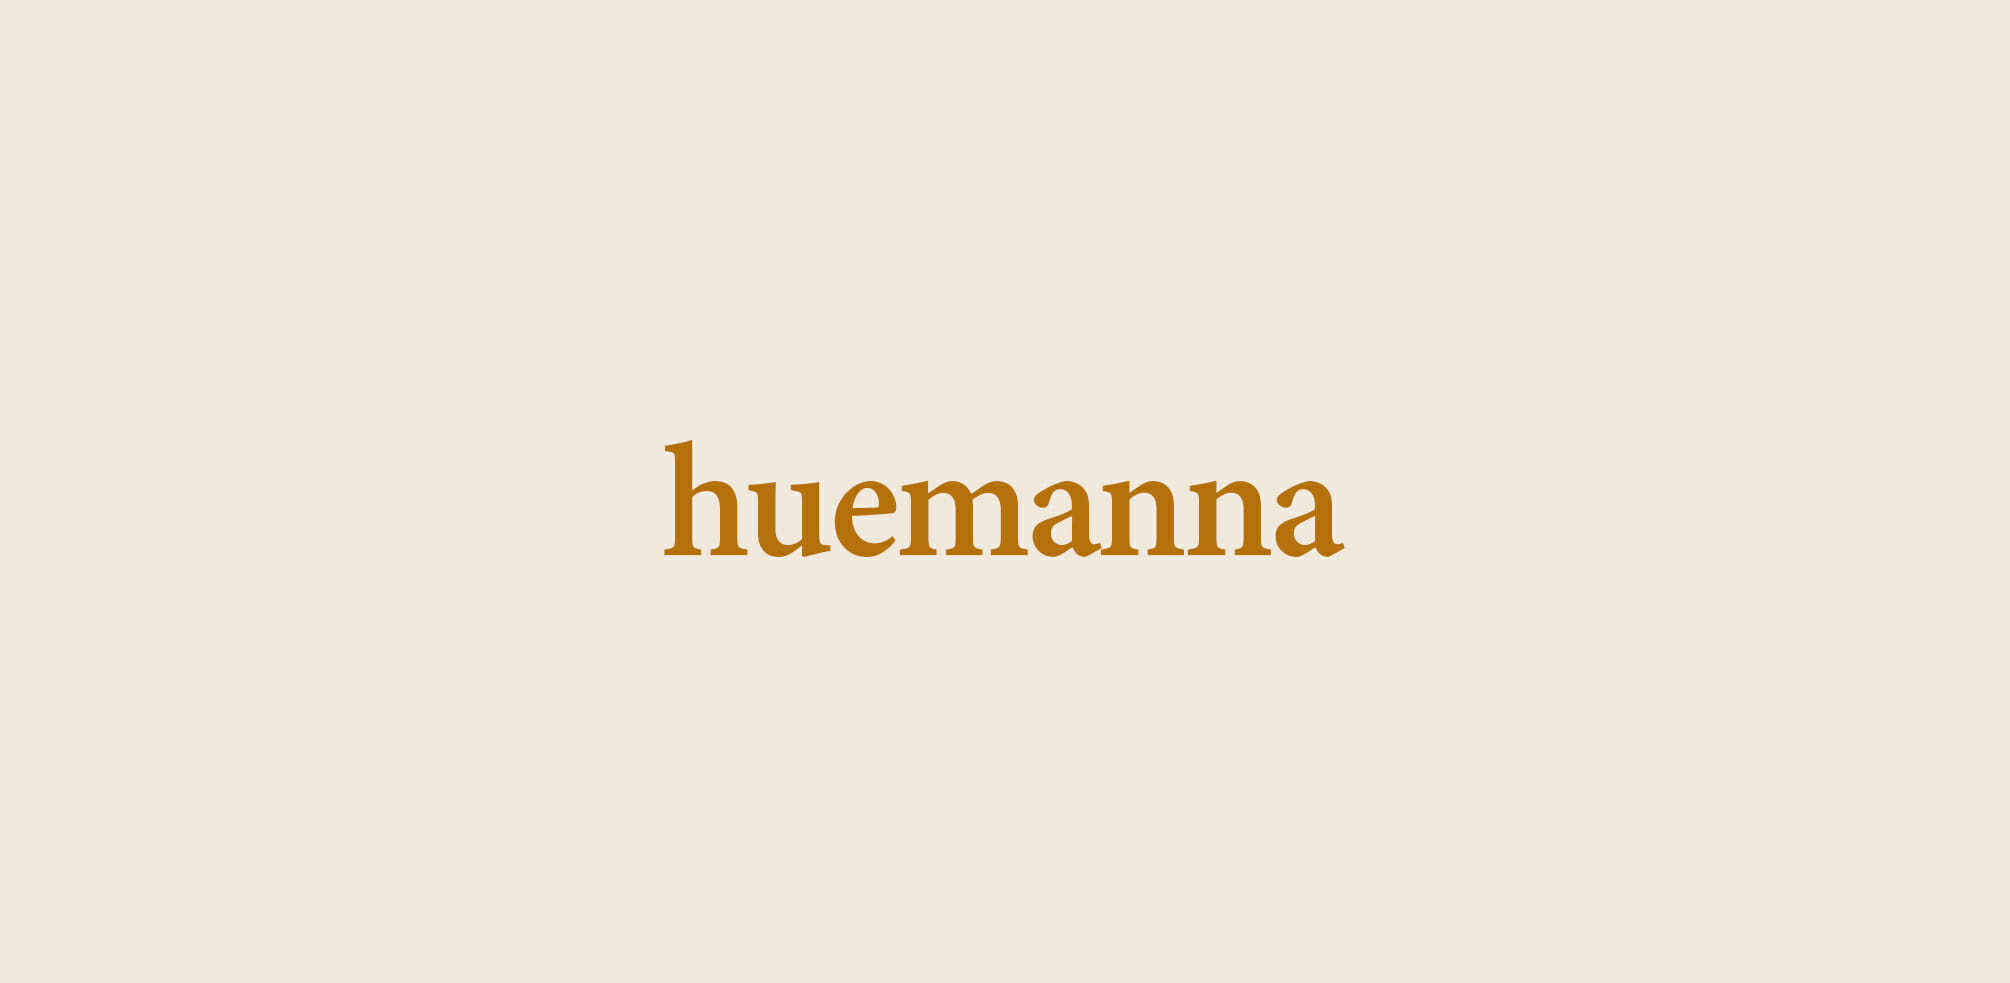 11Monograph&Co - Huemanna Logo